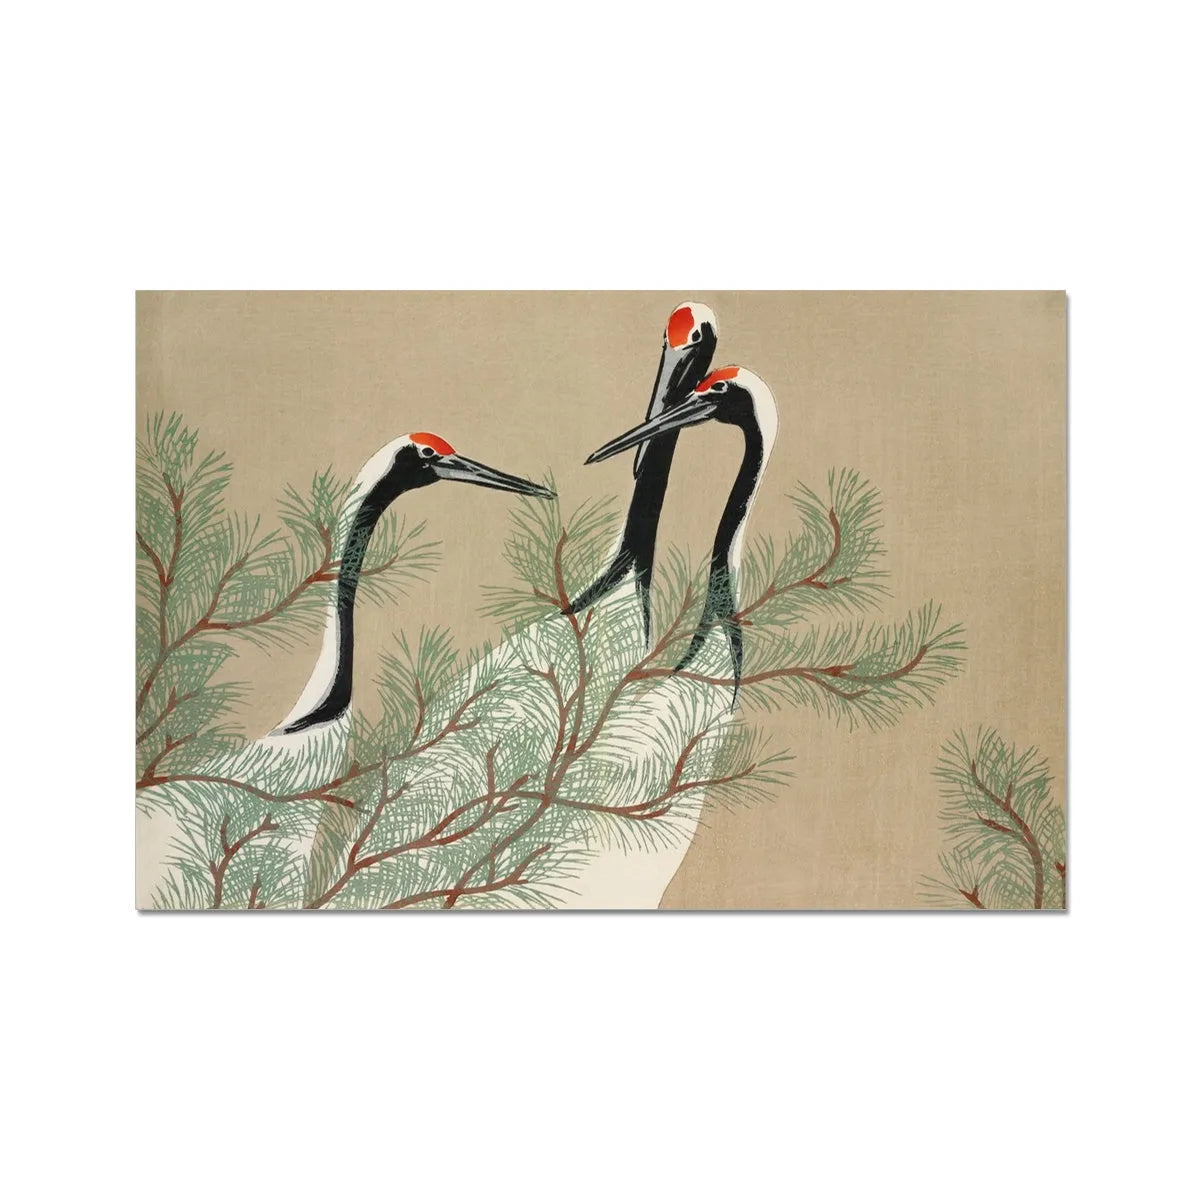 Cranes From Momoyogusa By Kamisaka Sekka Fine Art Print - 18’x12’ - Posters Prints & Visual Artwork - Aesthetic Art